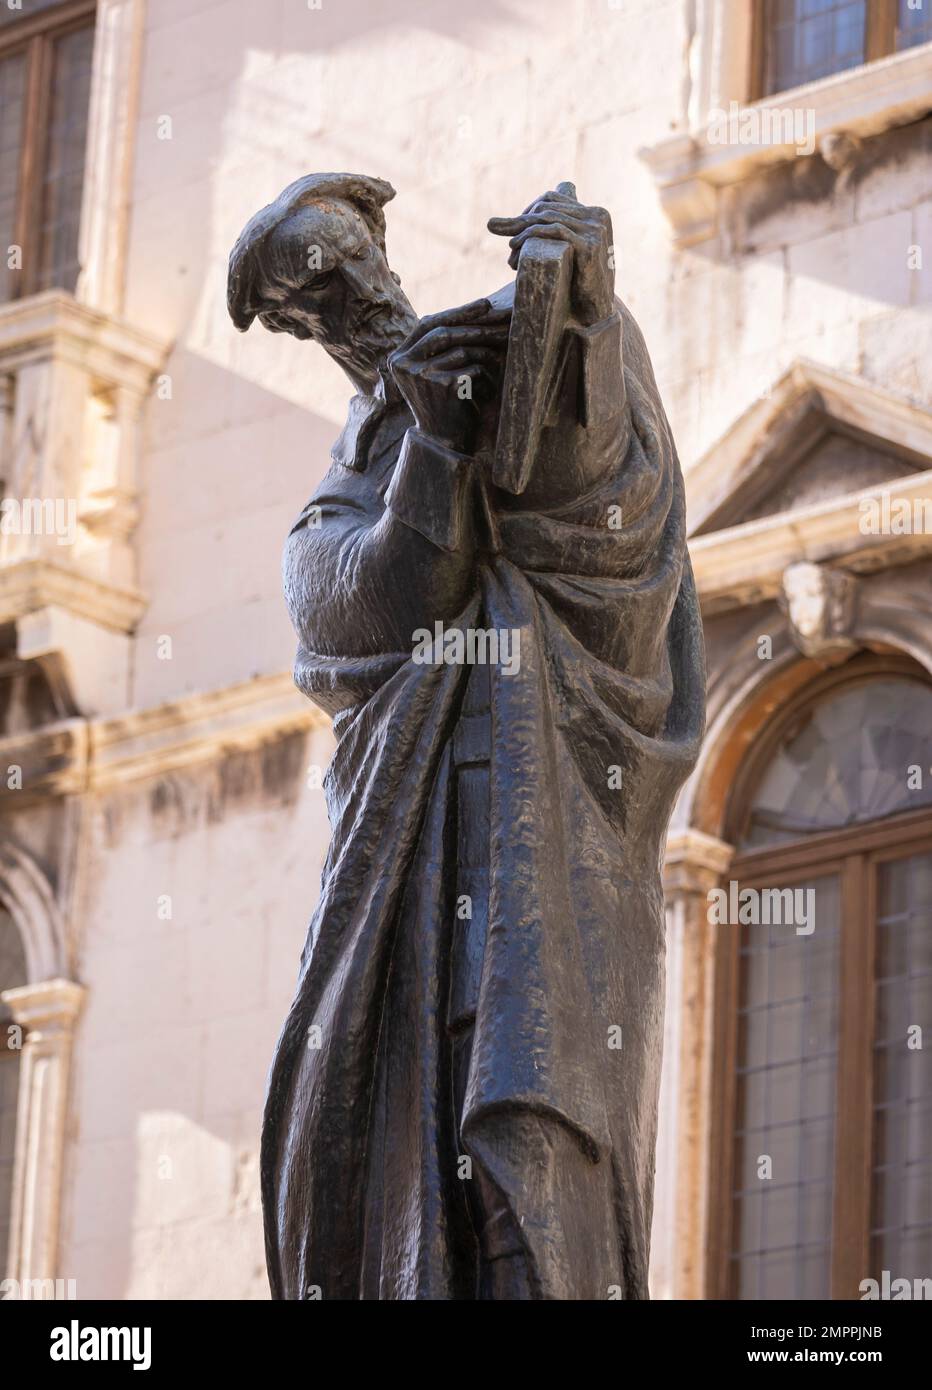 SPLIT, KROATIEN, EUROPA - Statue des kroatischen Dichters Marko Marulic, in der Altstadt von Split. Stockfoto